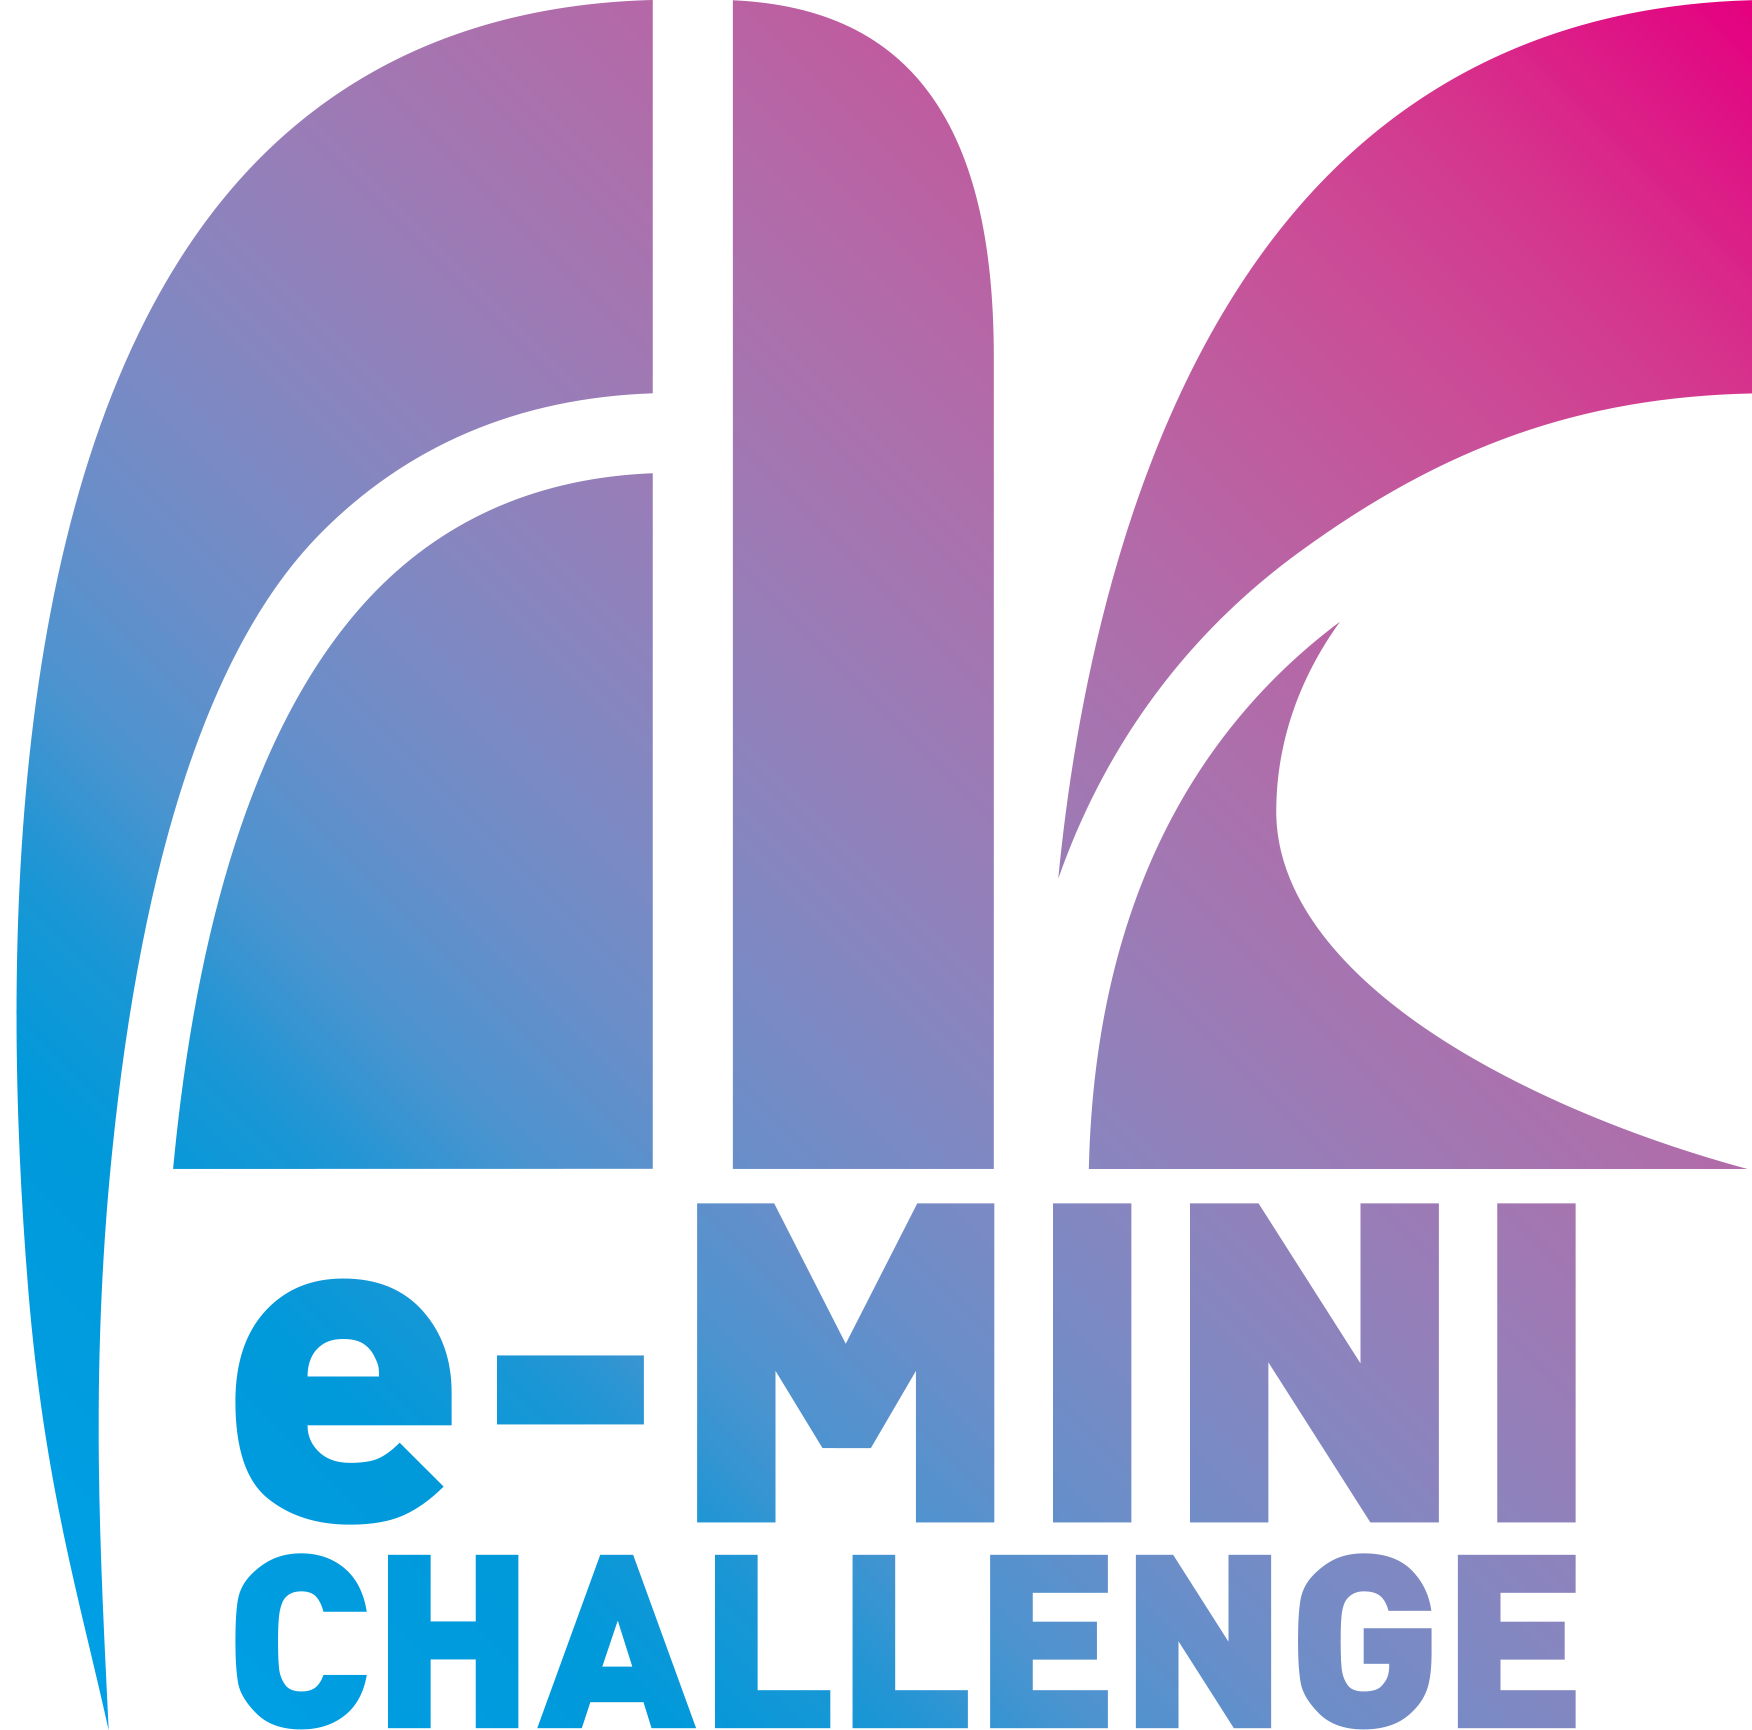 e-MINI CHALLENGE®2022 S2 Rd.7 ポイントランキング公開